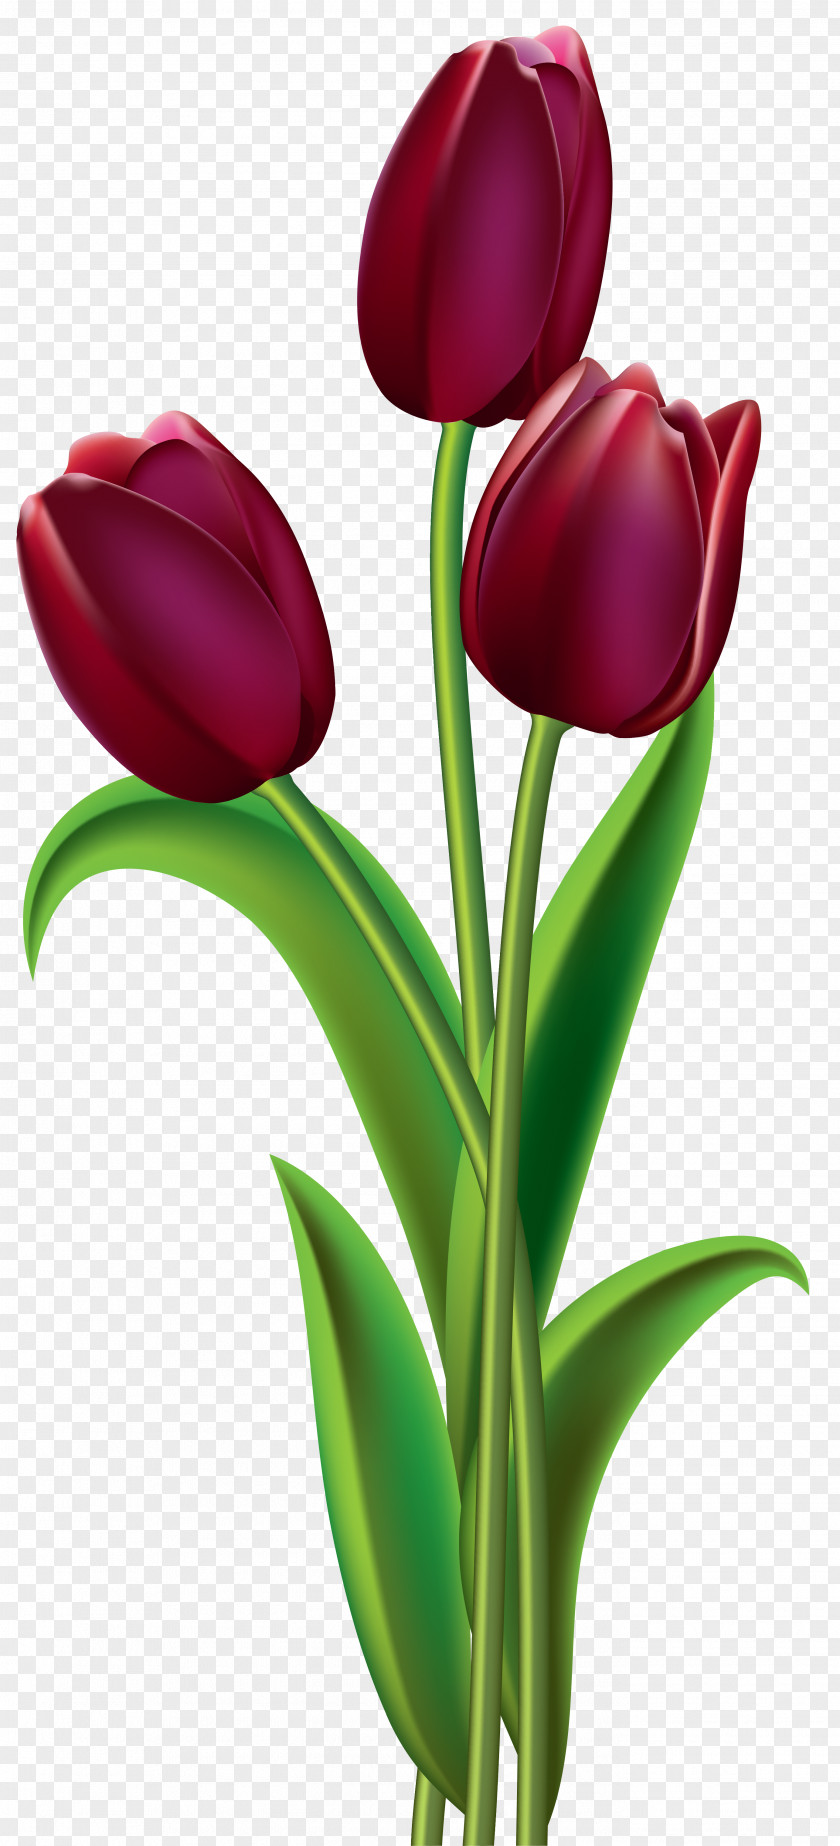 Red Dark Tulips Clipart Image Tulip Flower Clip Art PNG